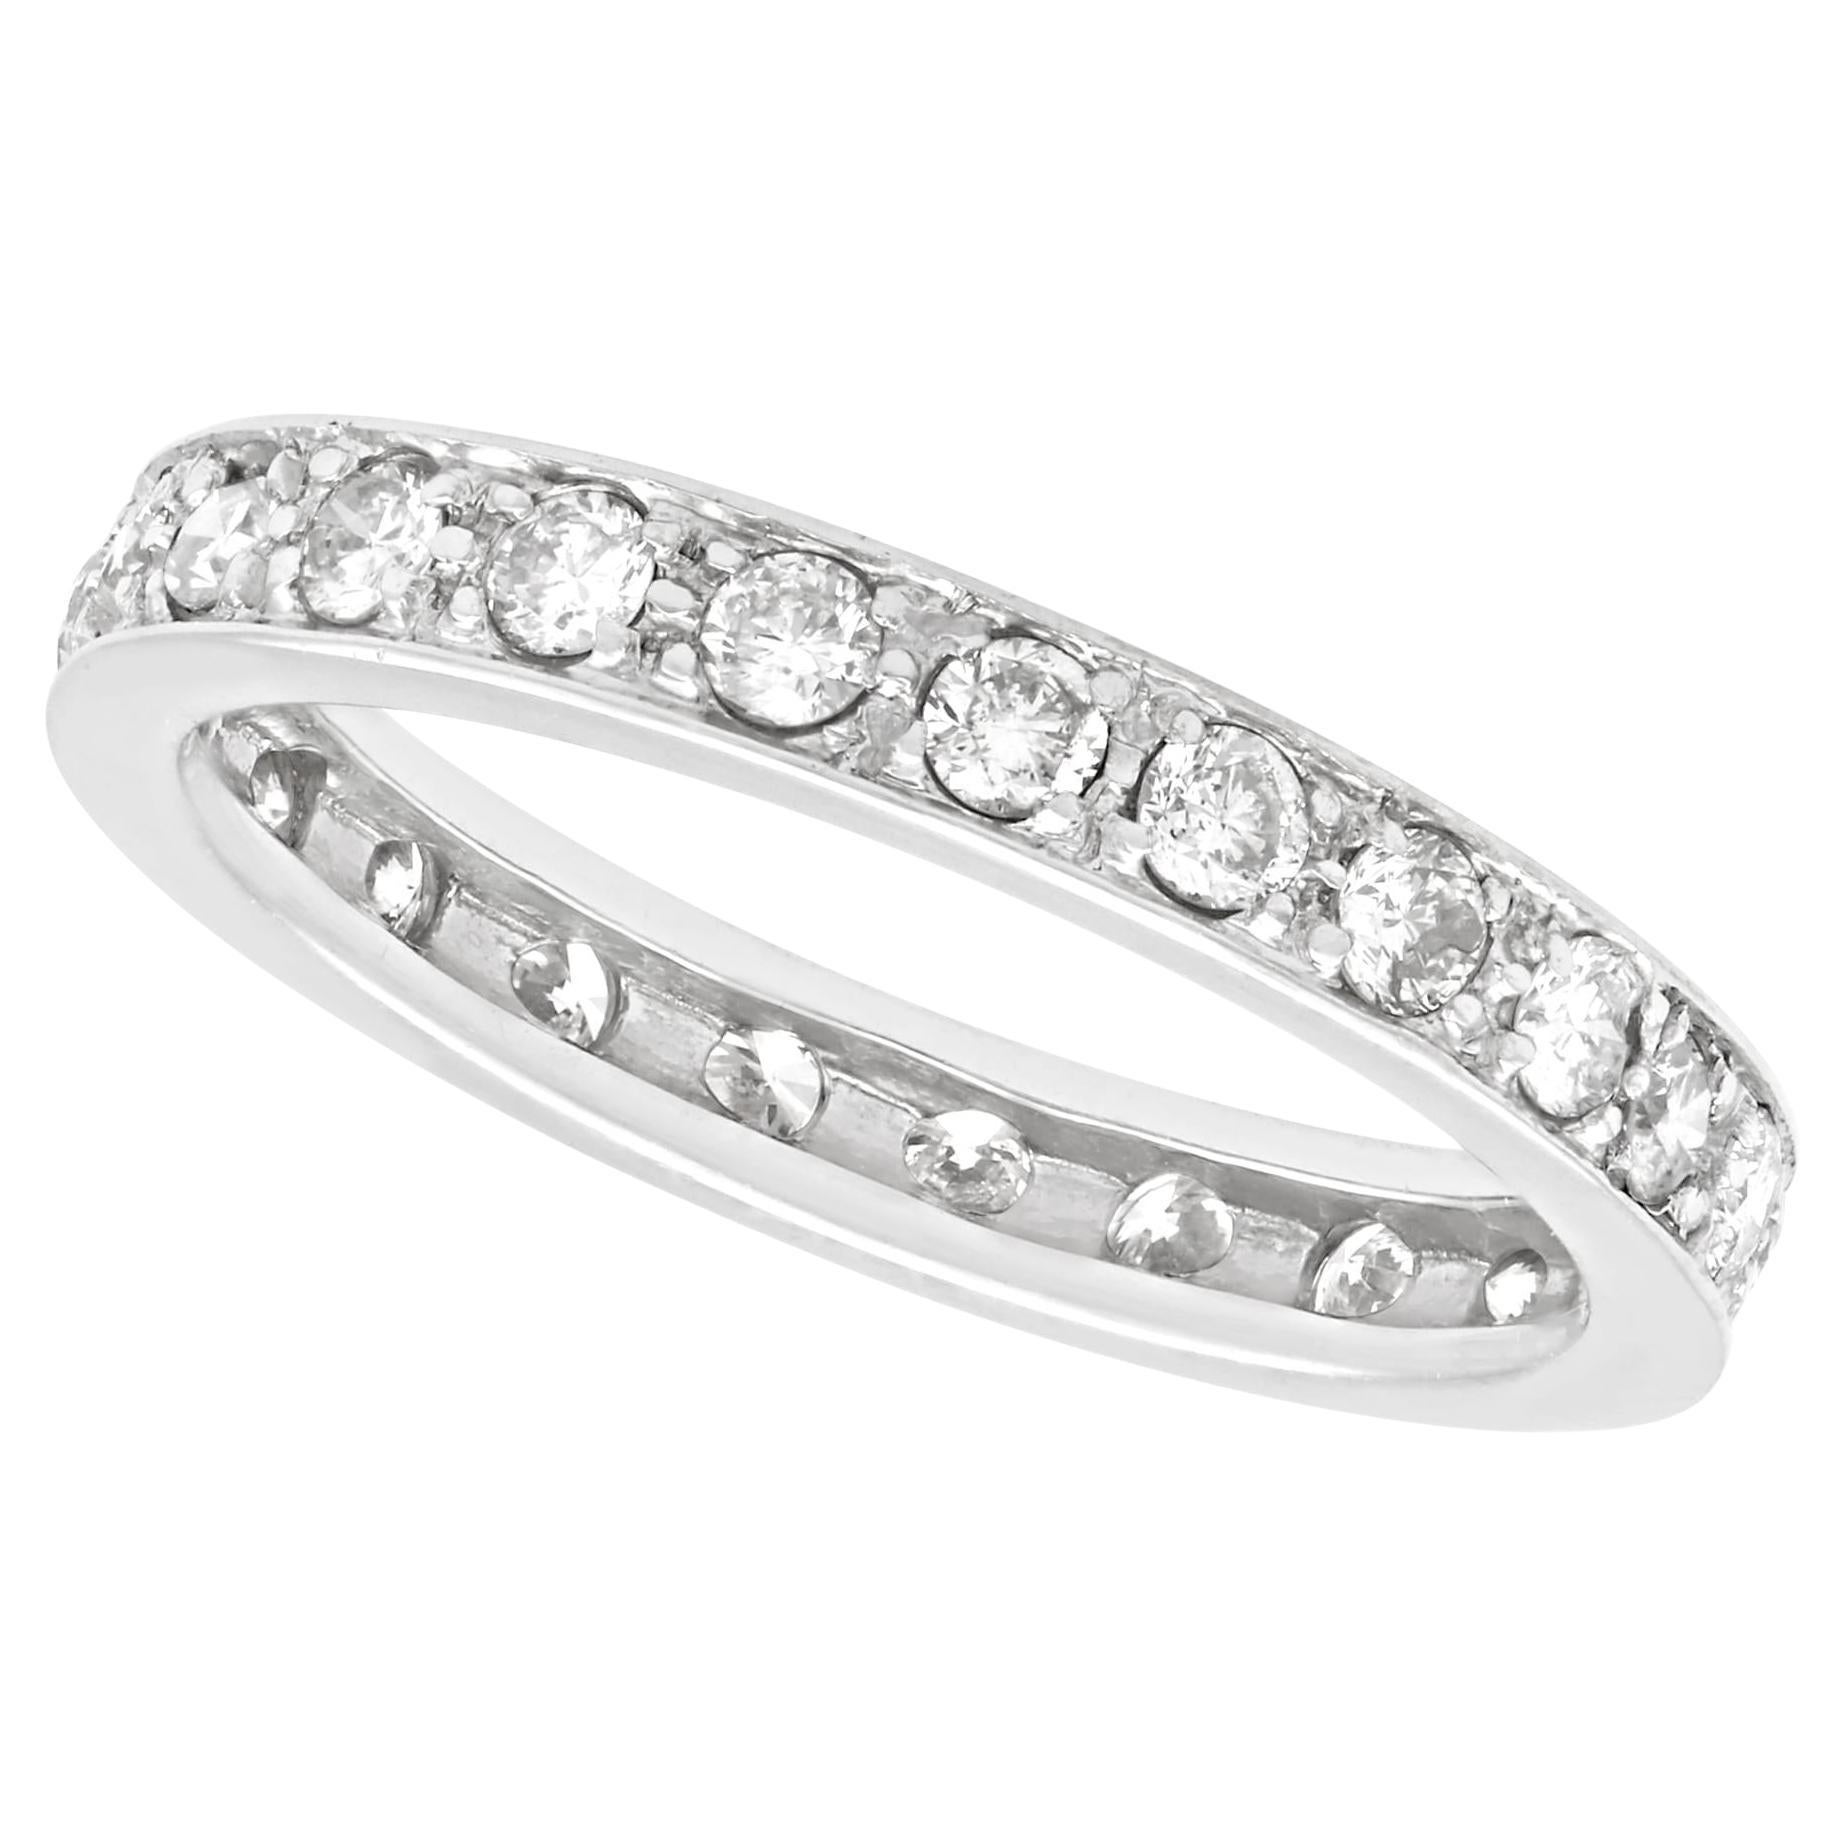 1960s Diamond and White Gold Full Eternity Engagement Ring